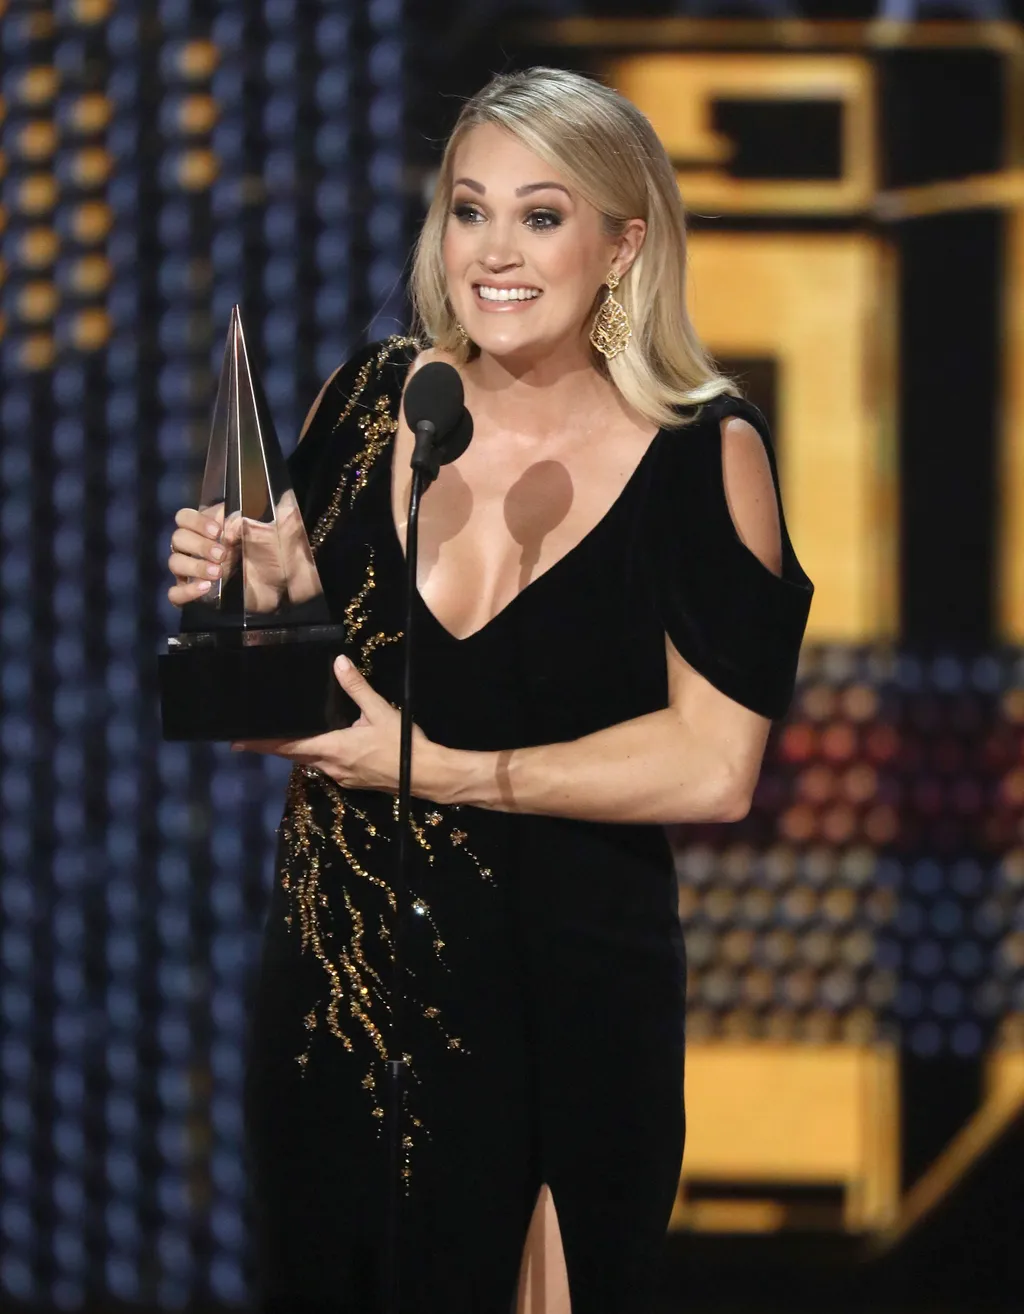 Carrie Underwood
AMA 2018 